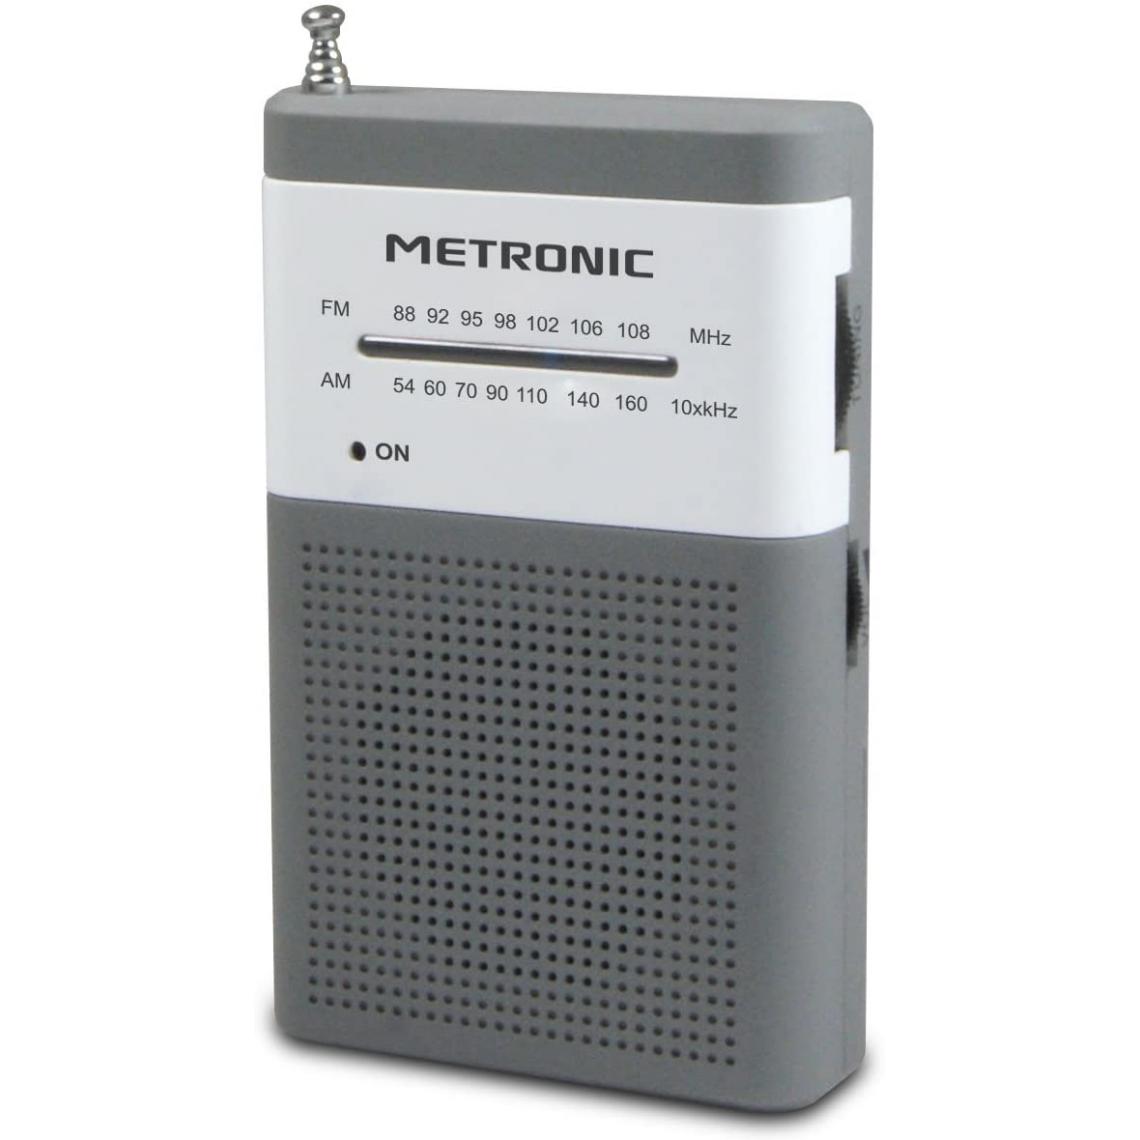 Metronic - radio Portable FM de Poche blanc gris - Radio